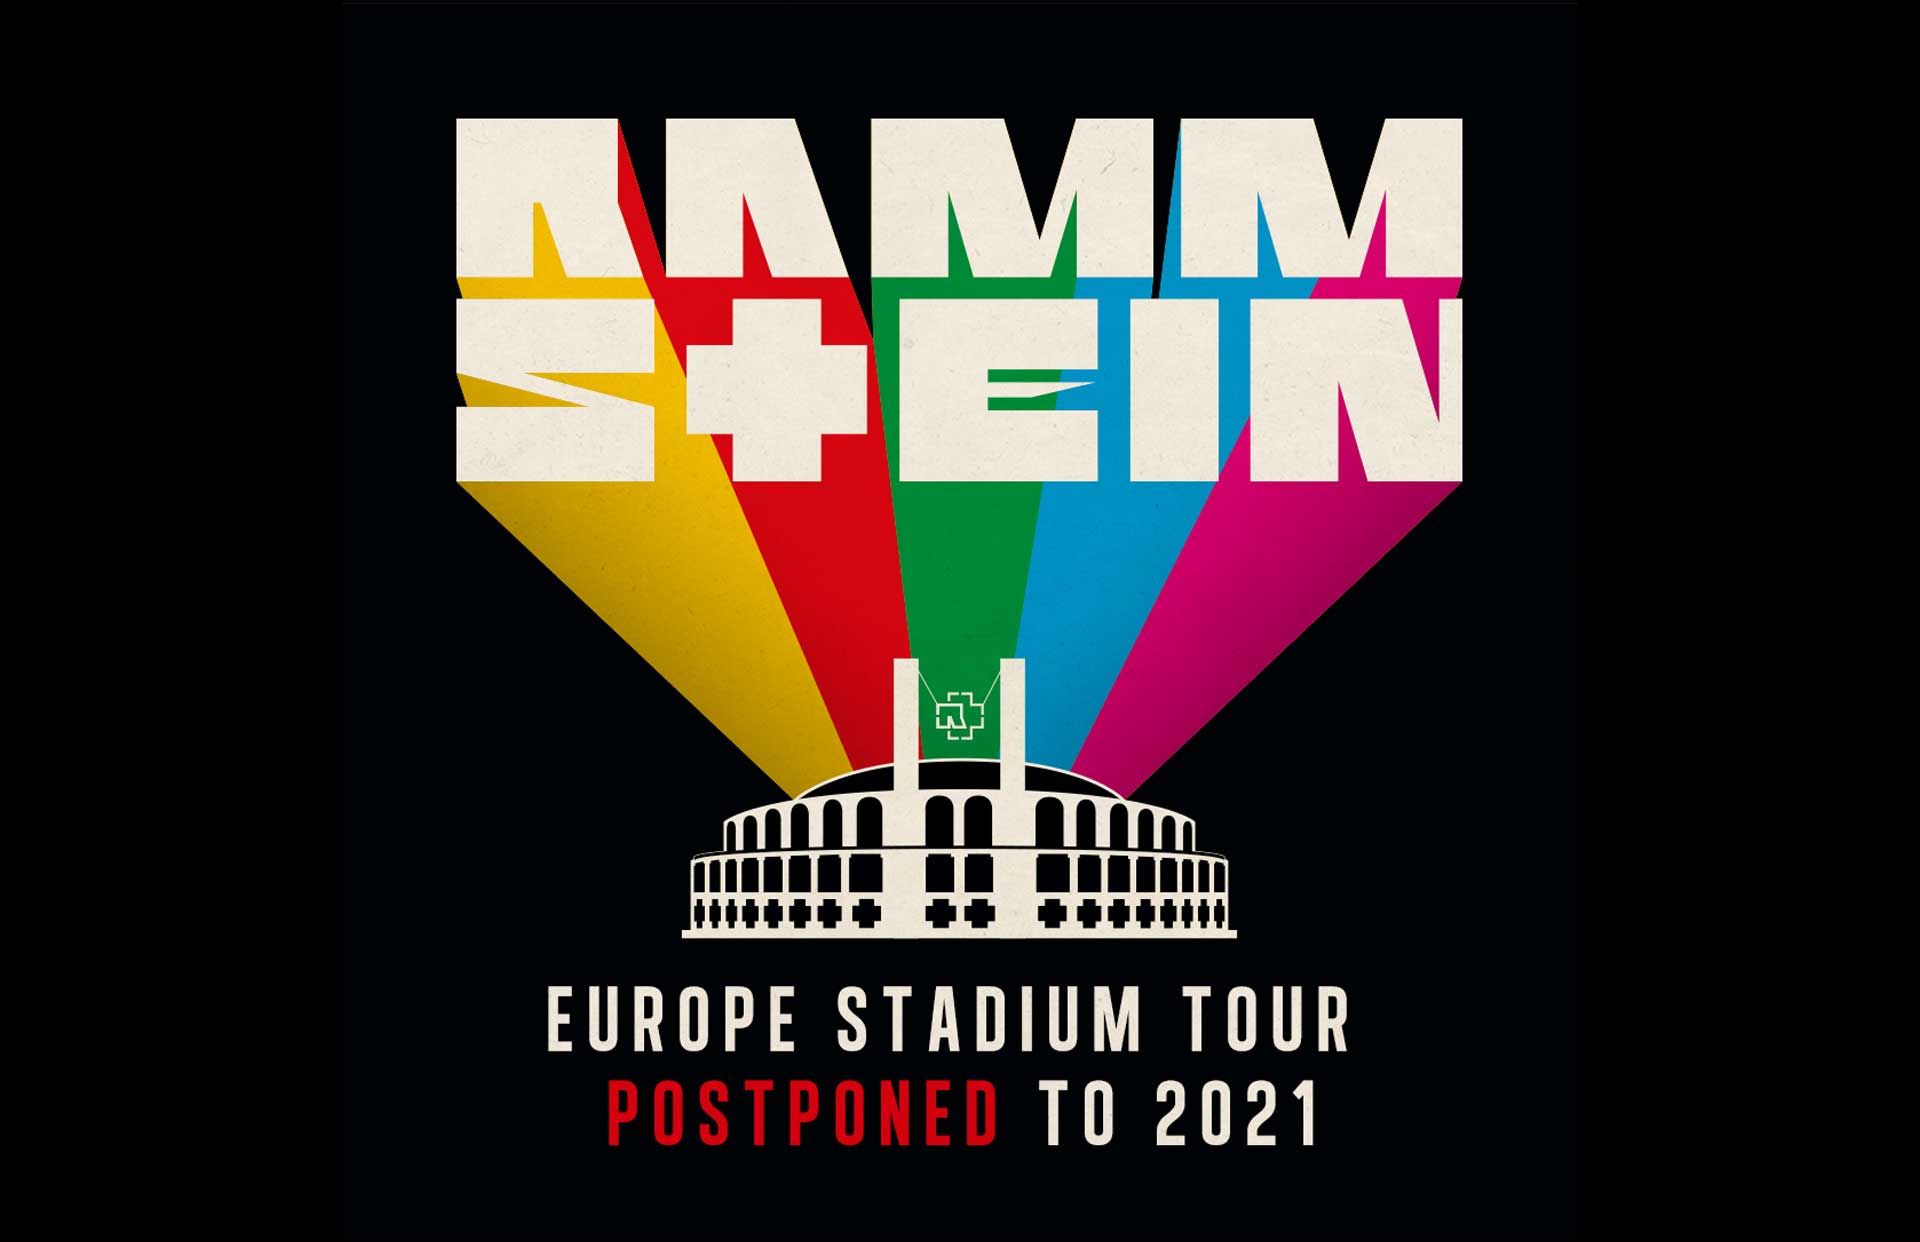 Rammstein Tour 2021